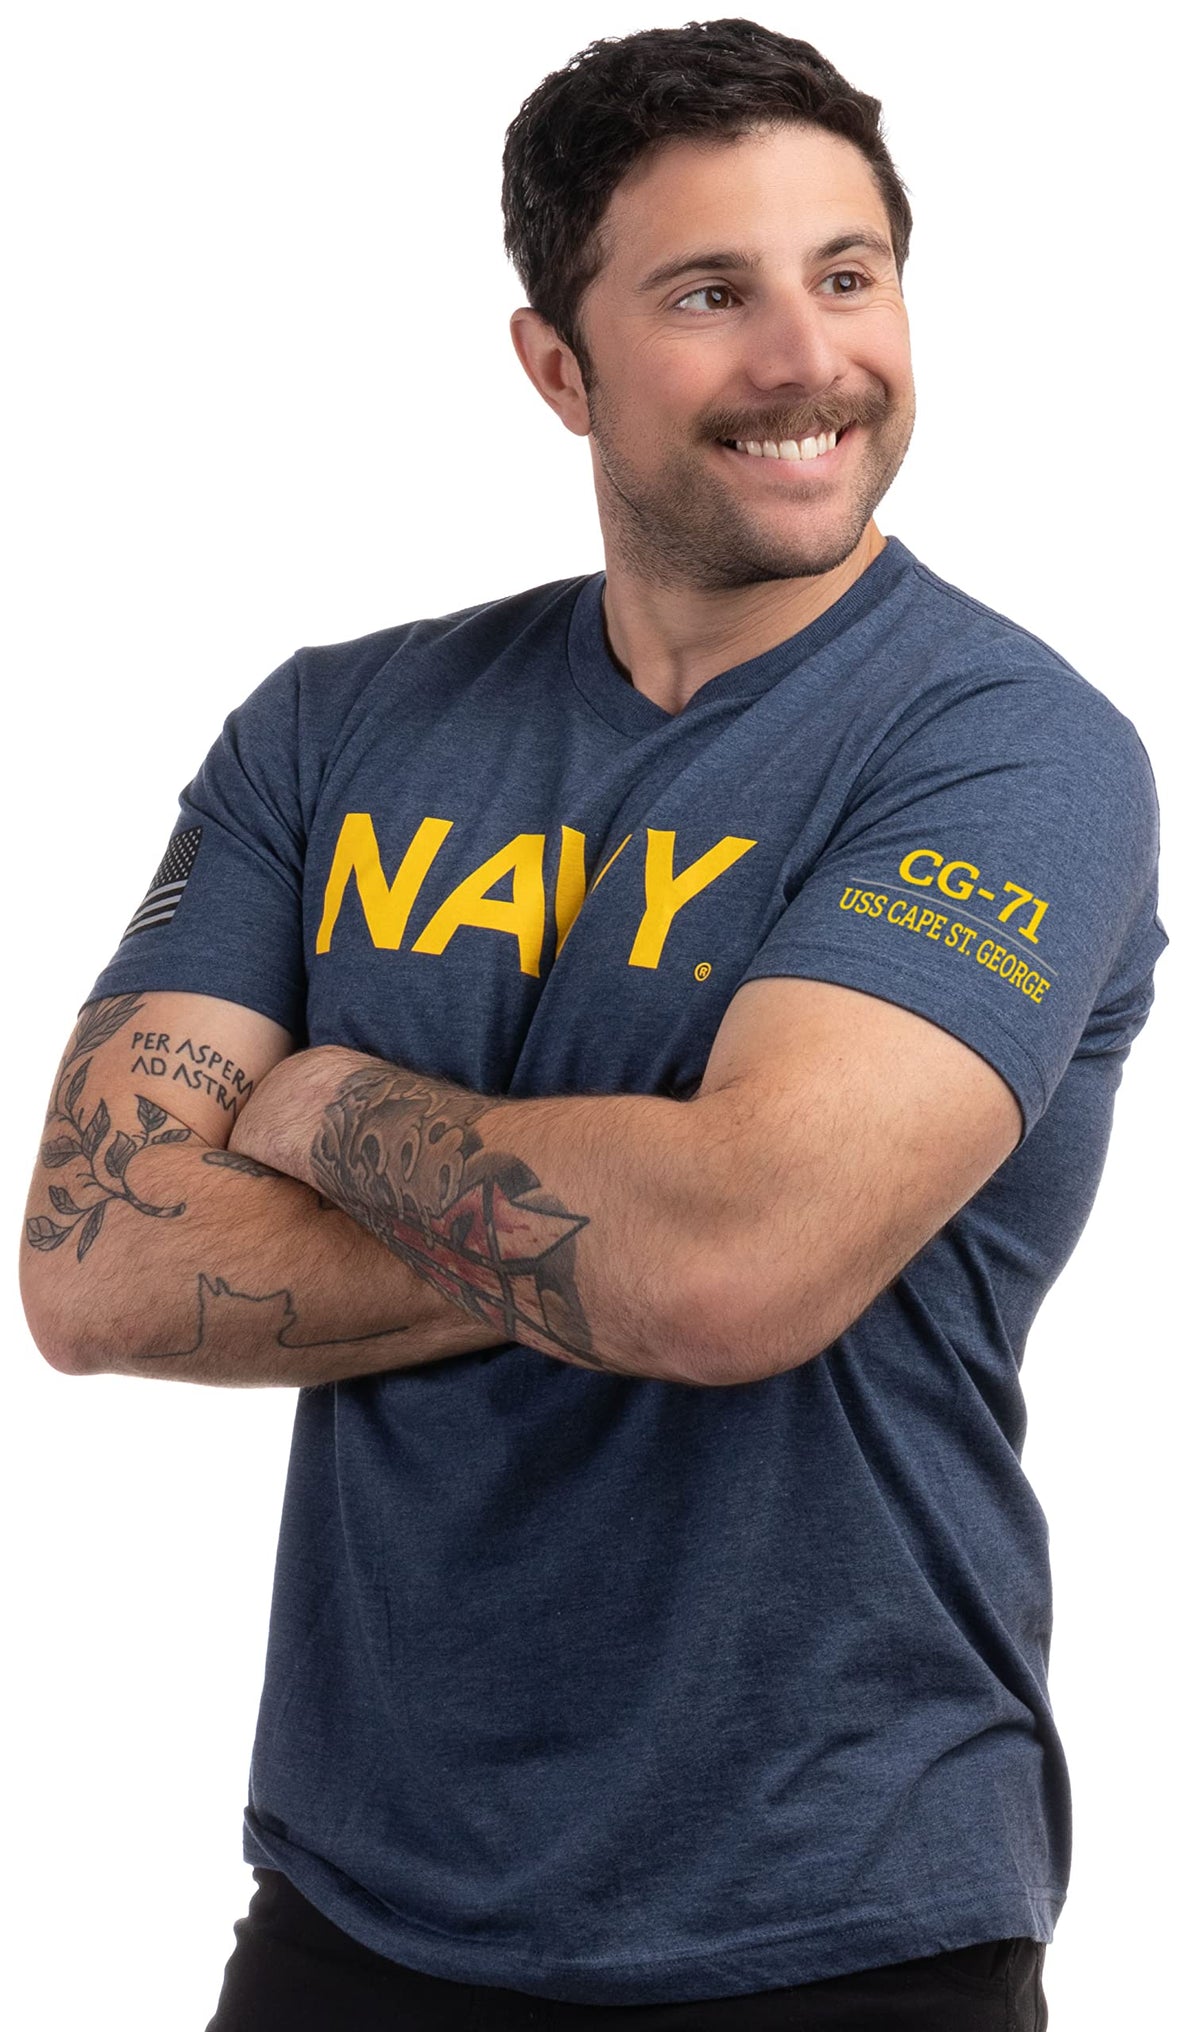 USS Cape St. George, CG-71 | U.S. Navy Sailor Veteran USN United States Naval T-shirt for Men Women